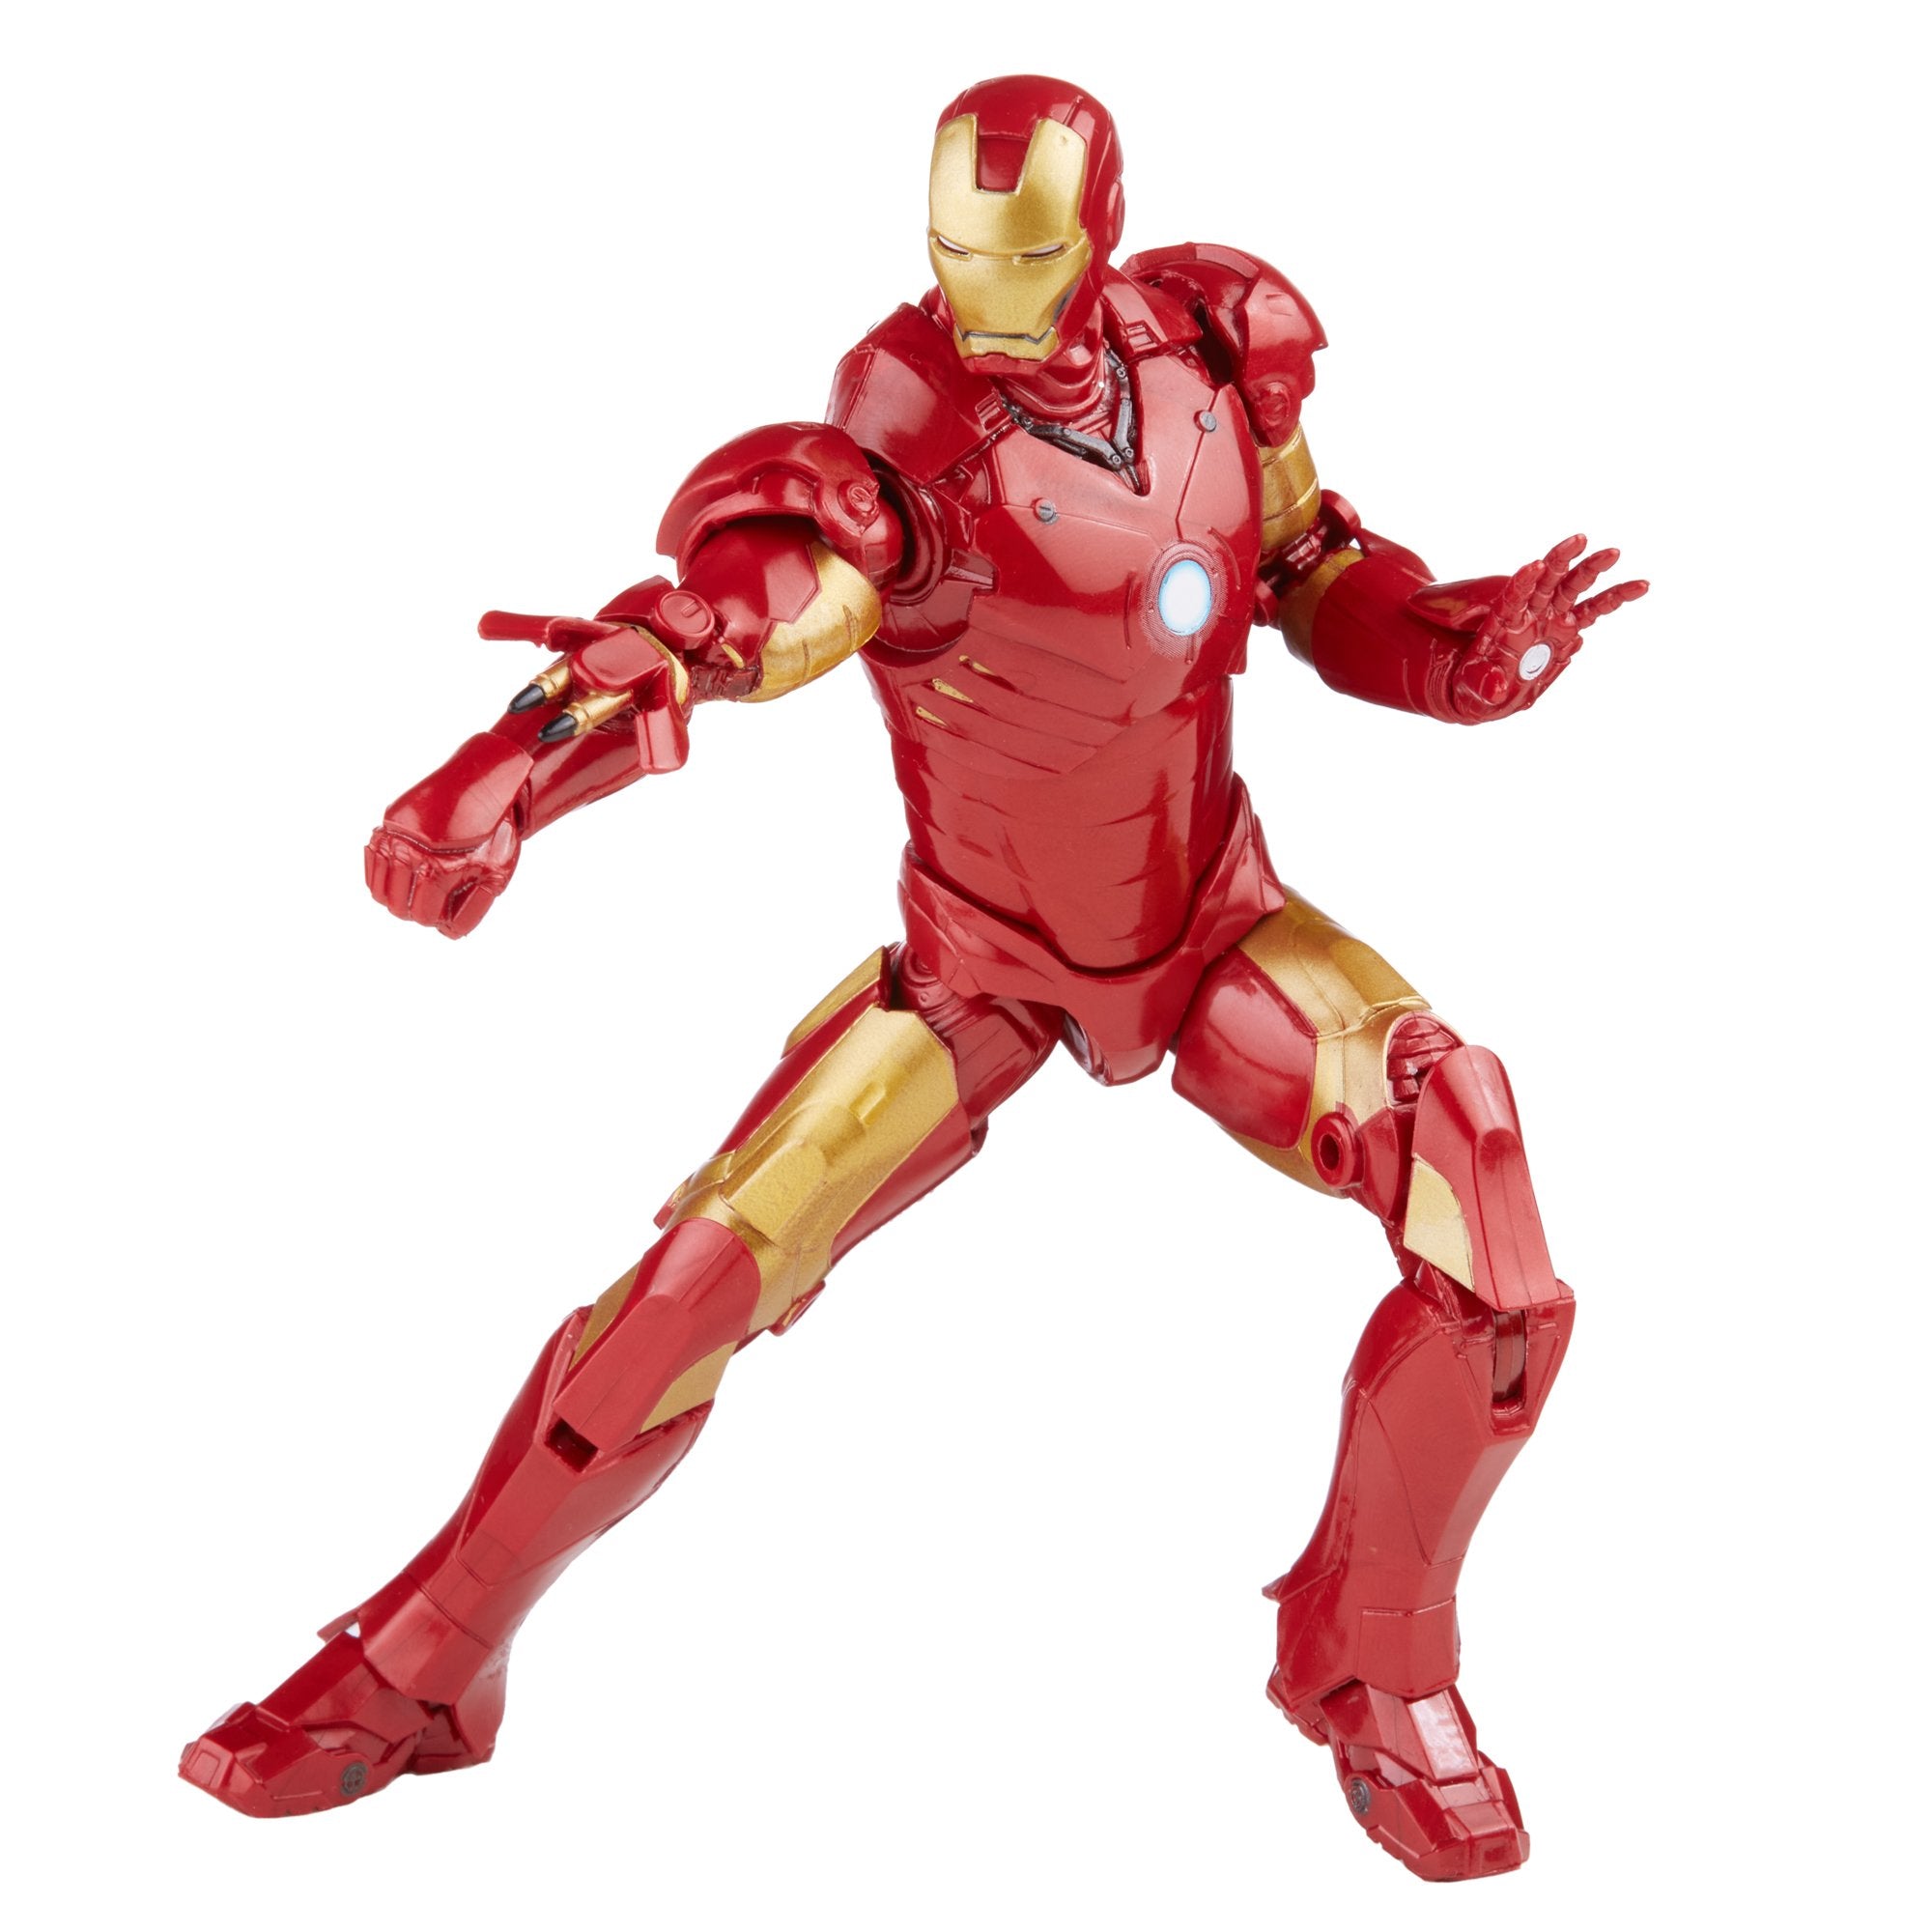 Avengers Infinity Saga Marvel Legends Series 6-inch Iron Man Mark 3 Action Figure